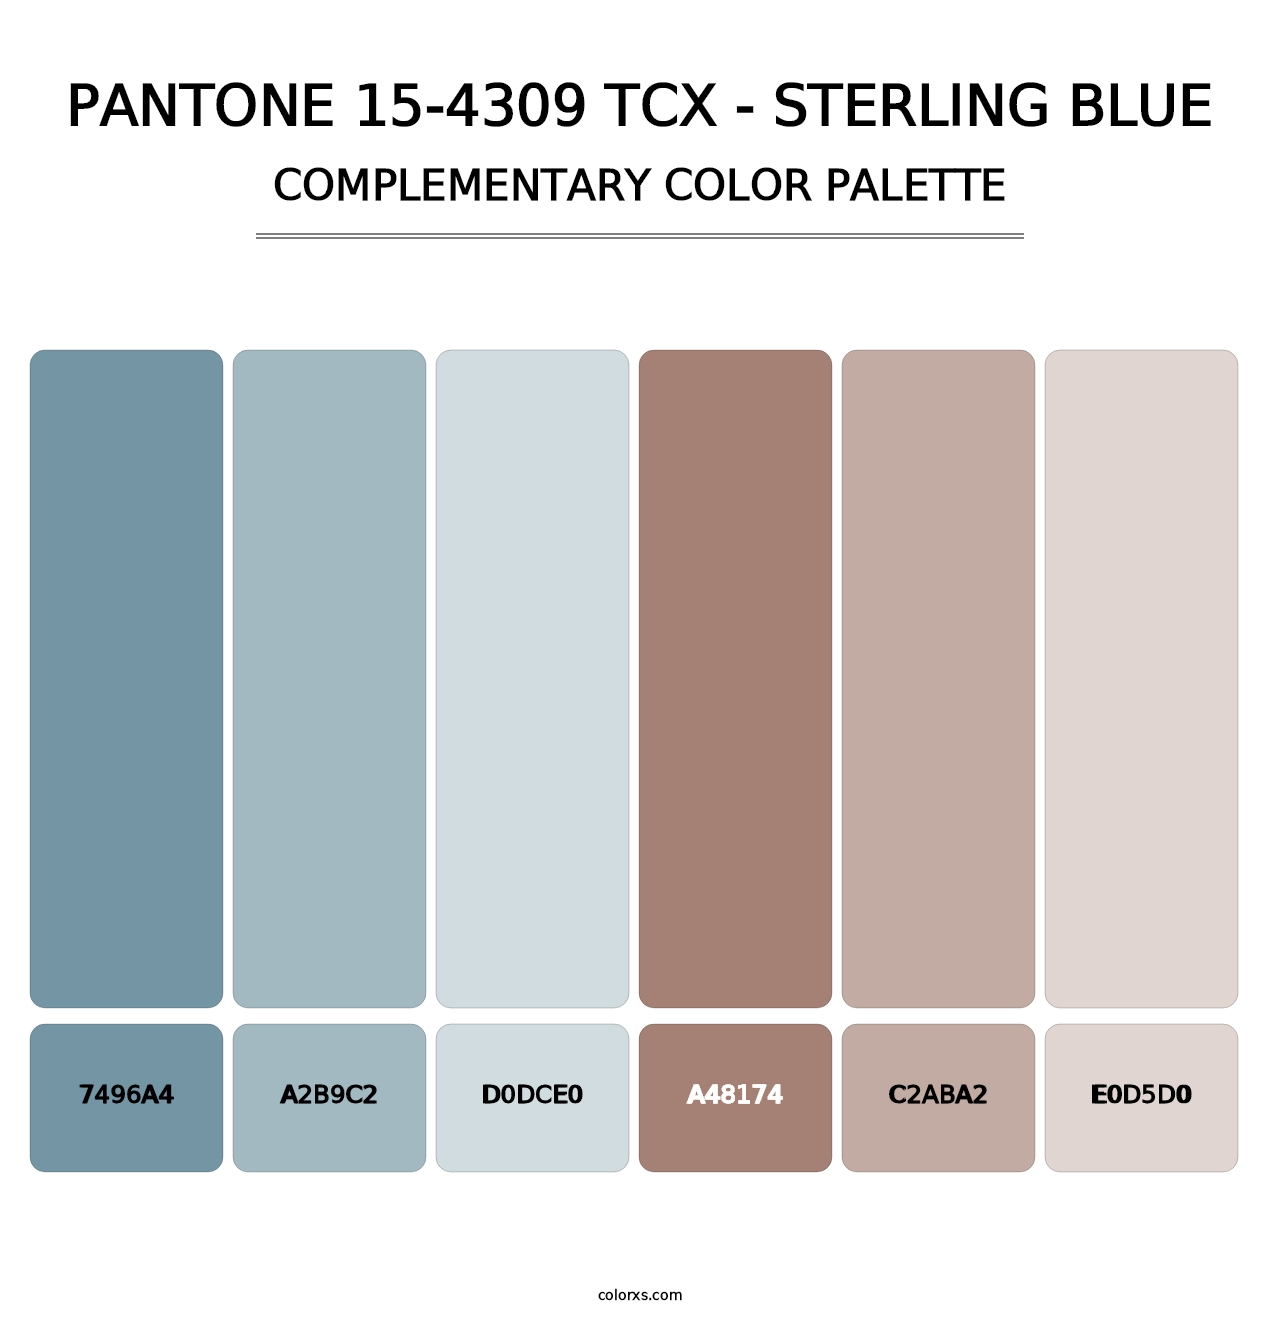 PANTONE 15-4309 TCX - Sterling Blue - Complementary Color Palette